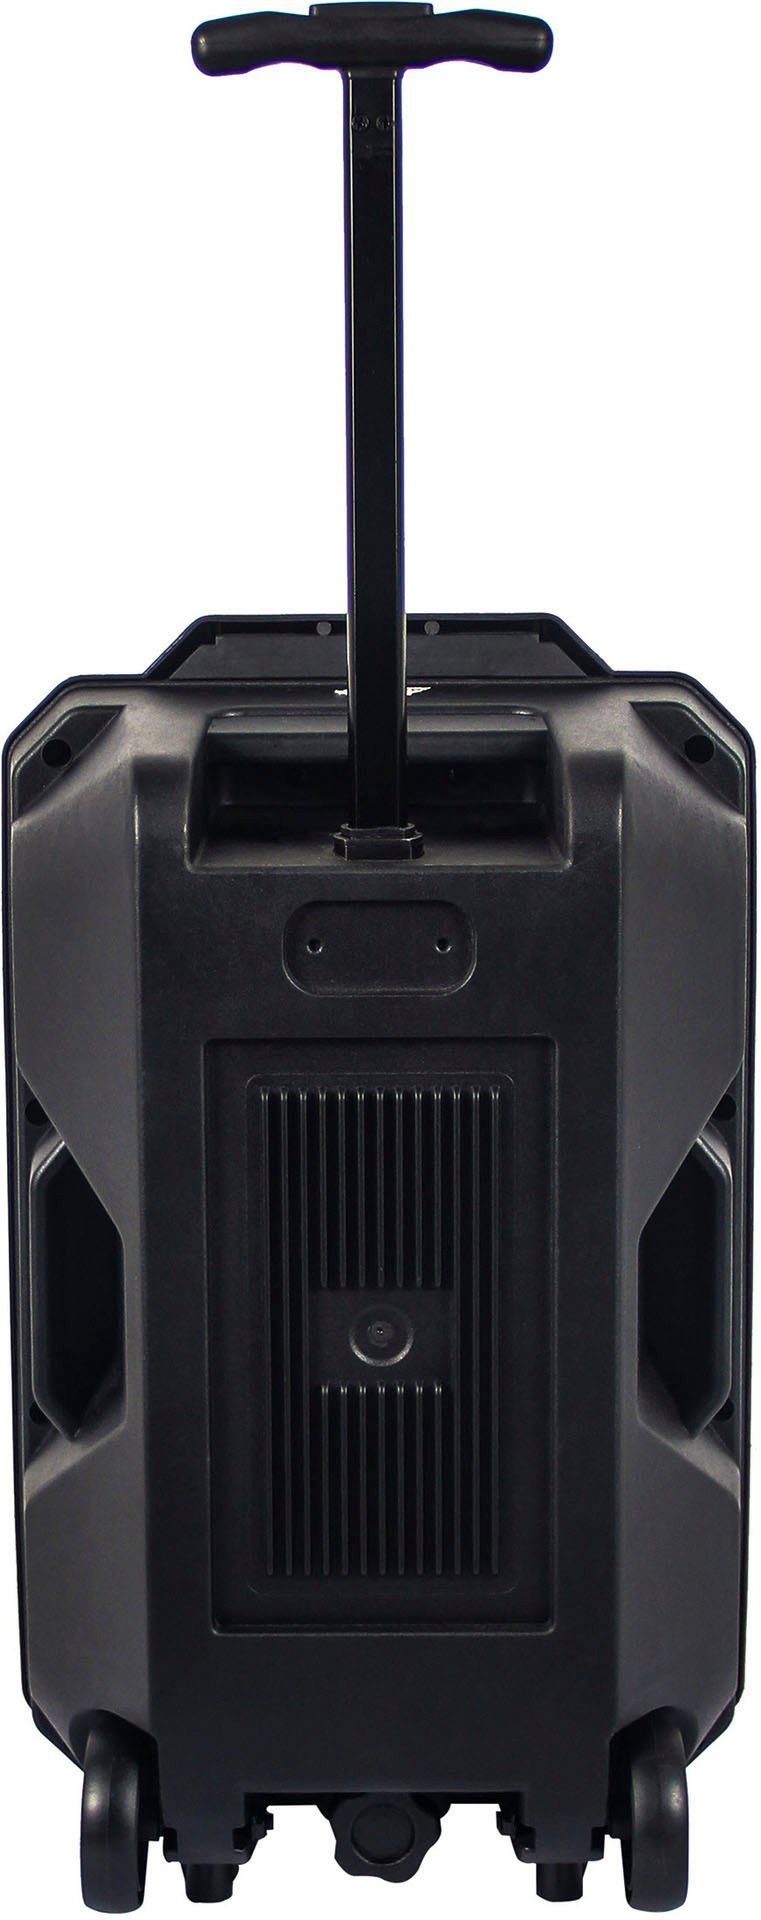 TSP-120 Portable-Lautsprecher W) Denver 8 (Bluetooth,